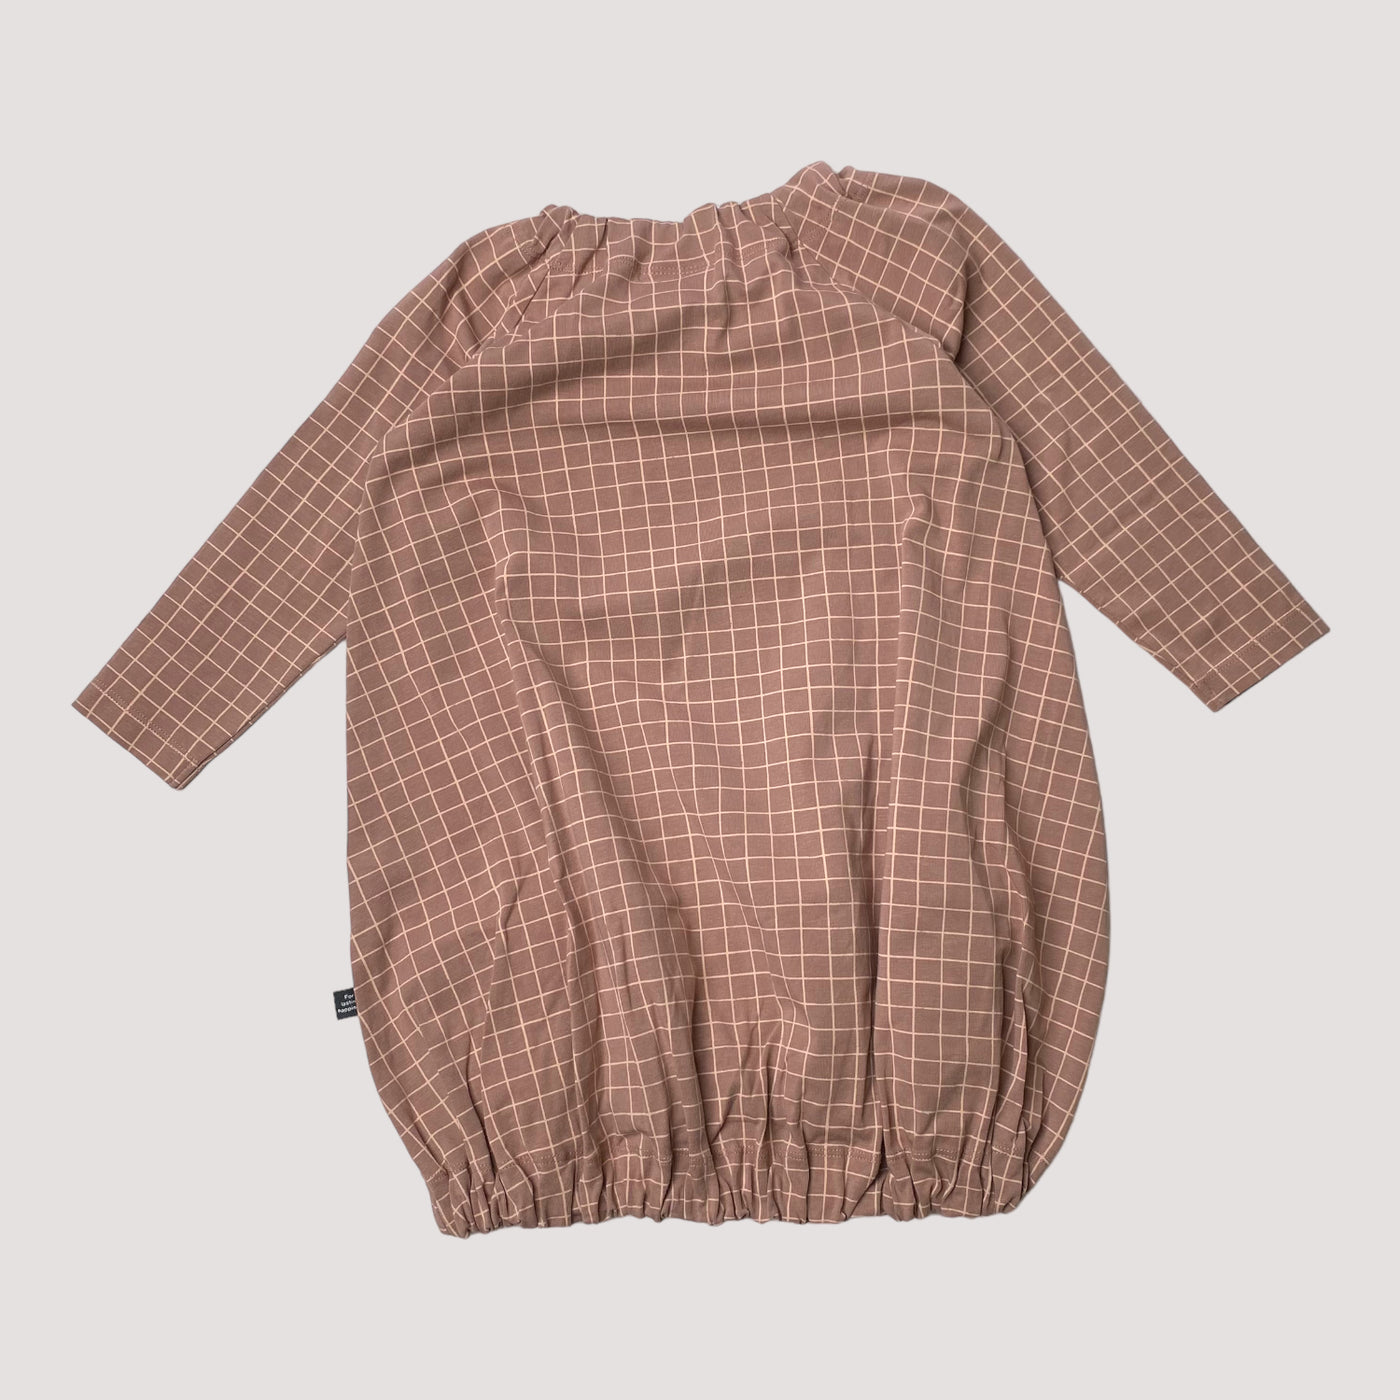 Papu dress, grid | 86/92cm